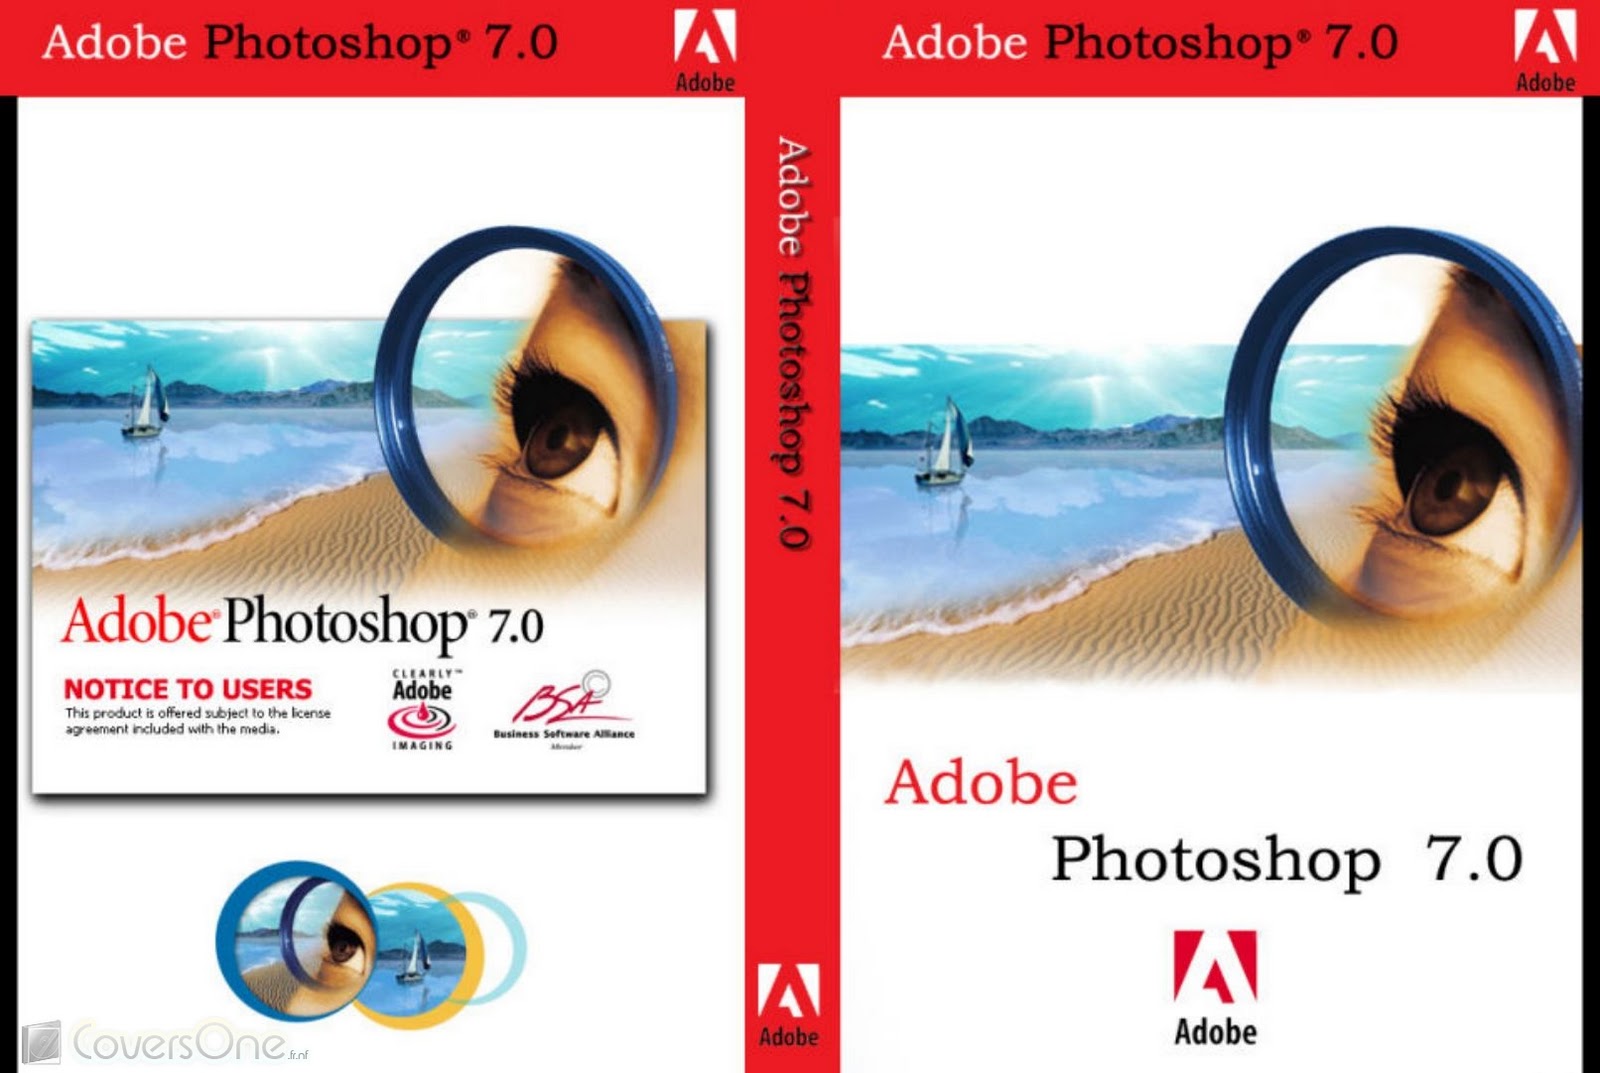 Adobe Photoshop Cs7 Full Version Windows 7